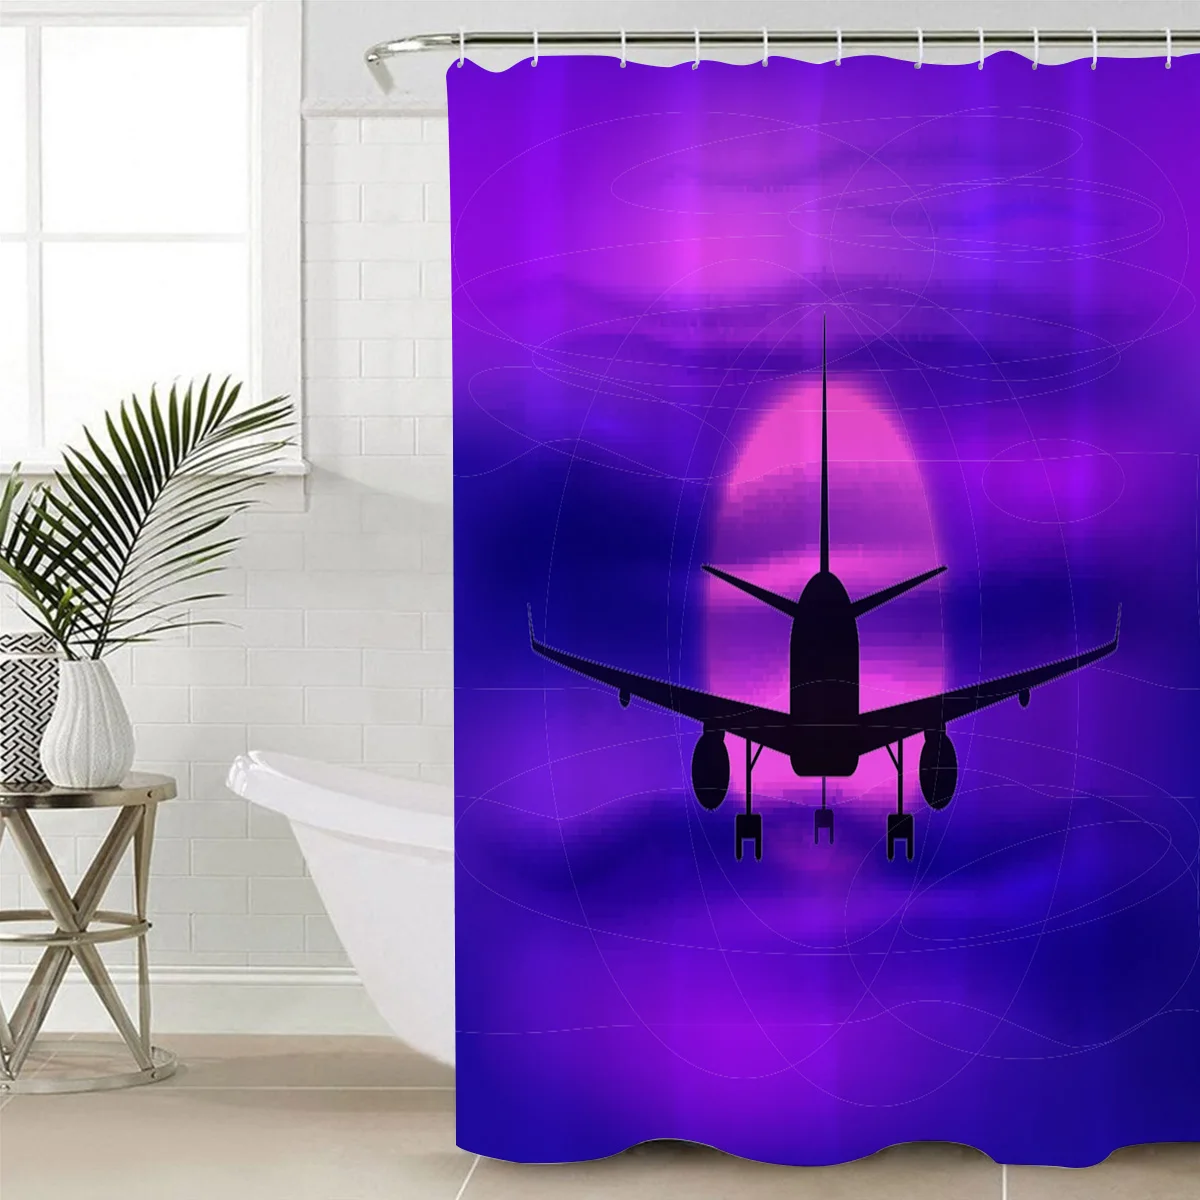 Modern Aviation Aircraft Purple Clouds Shower Curtain Bathroom Decor Fabric Shower Curtain Farmhouse Decor Shower Curtains Aliexpress